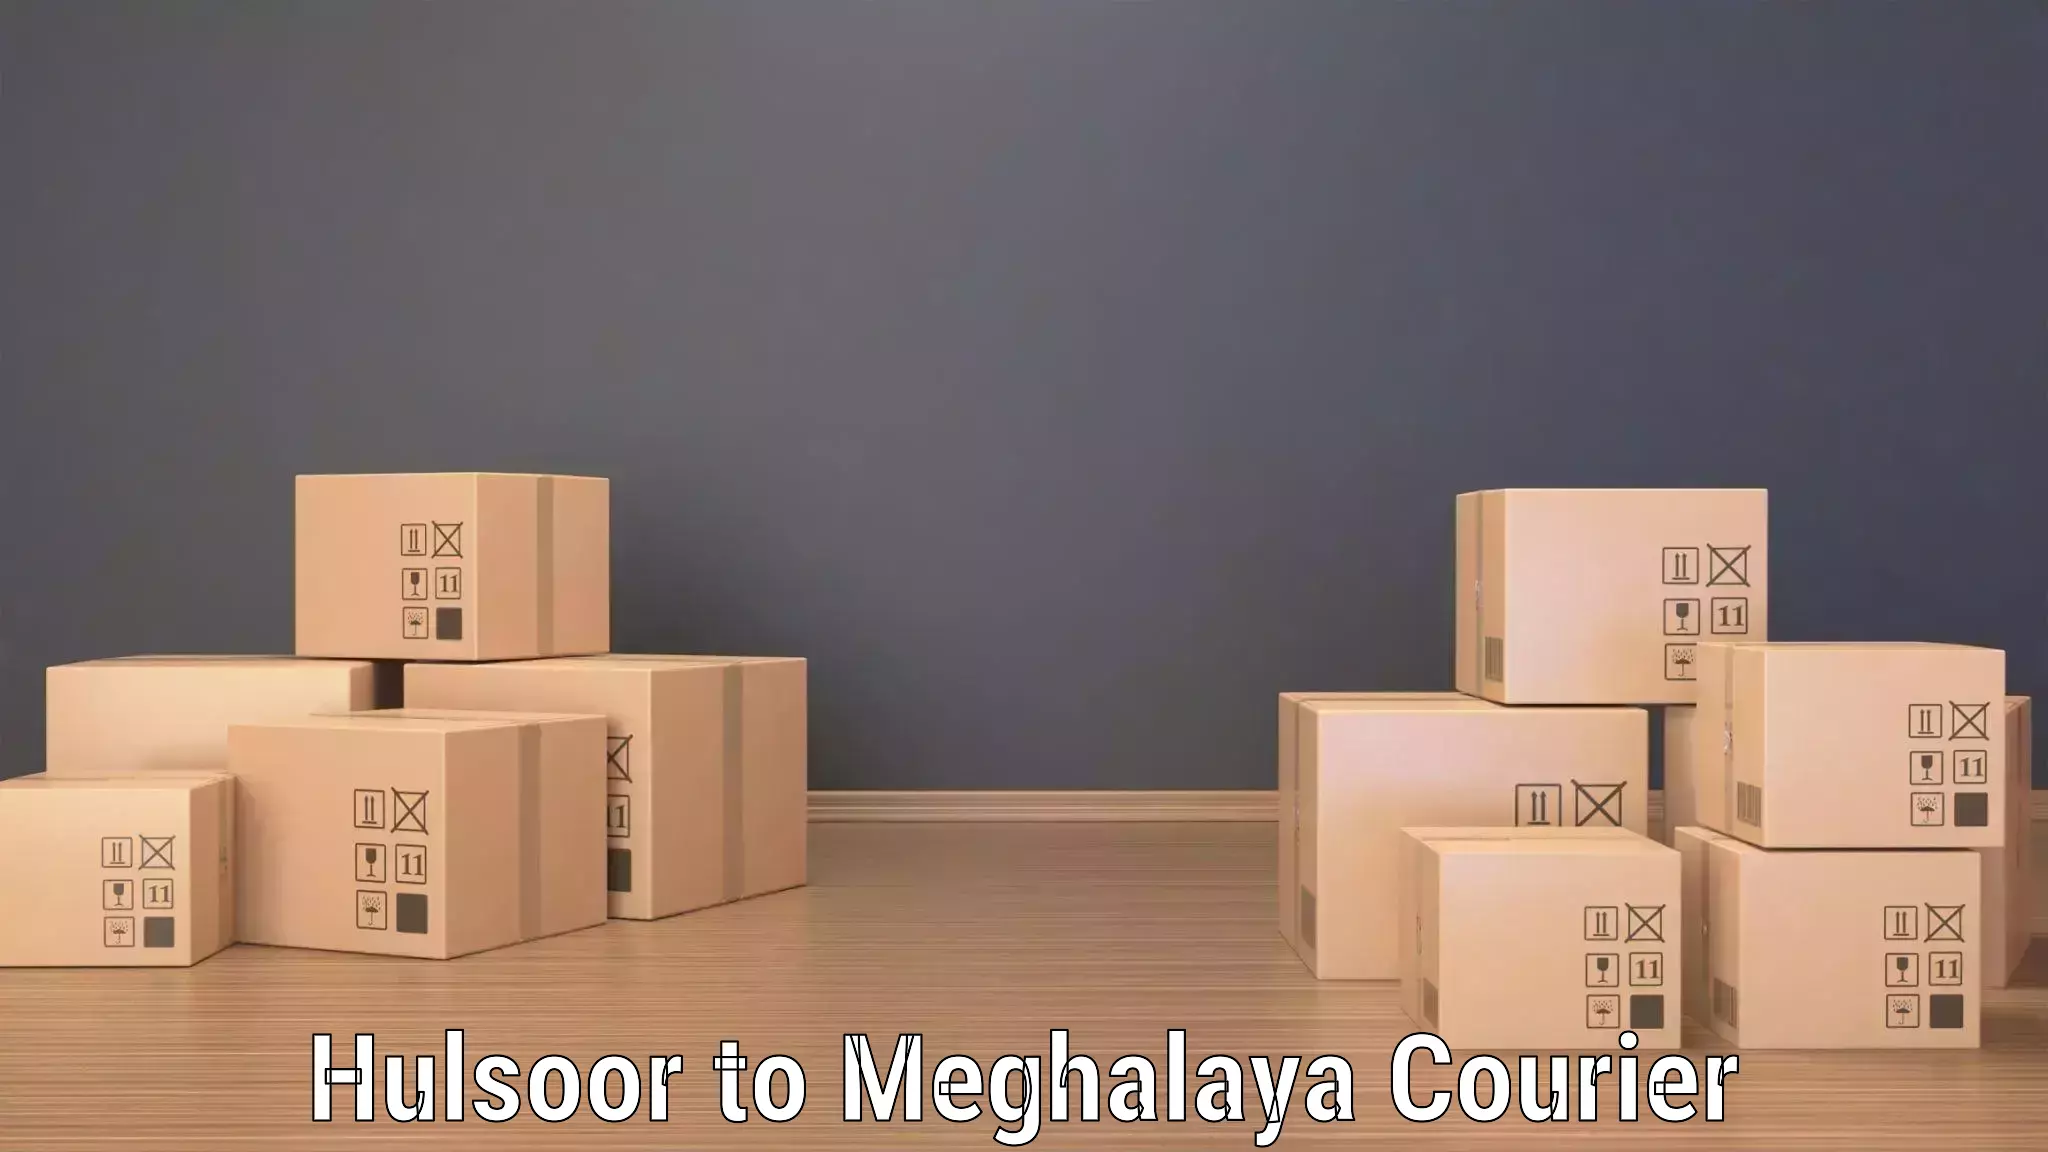 Courier service efficiency Hulsoor to Meghalaya